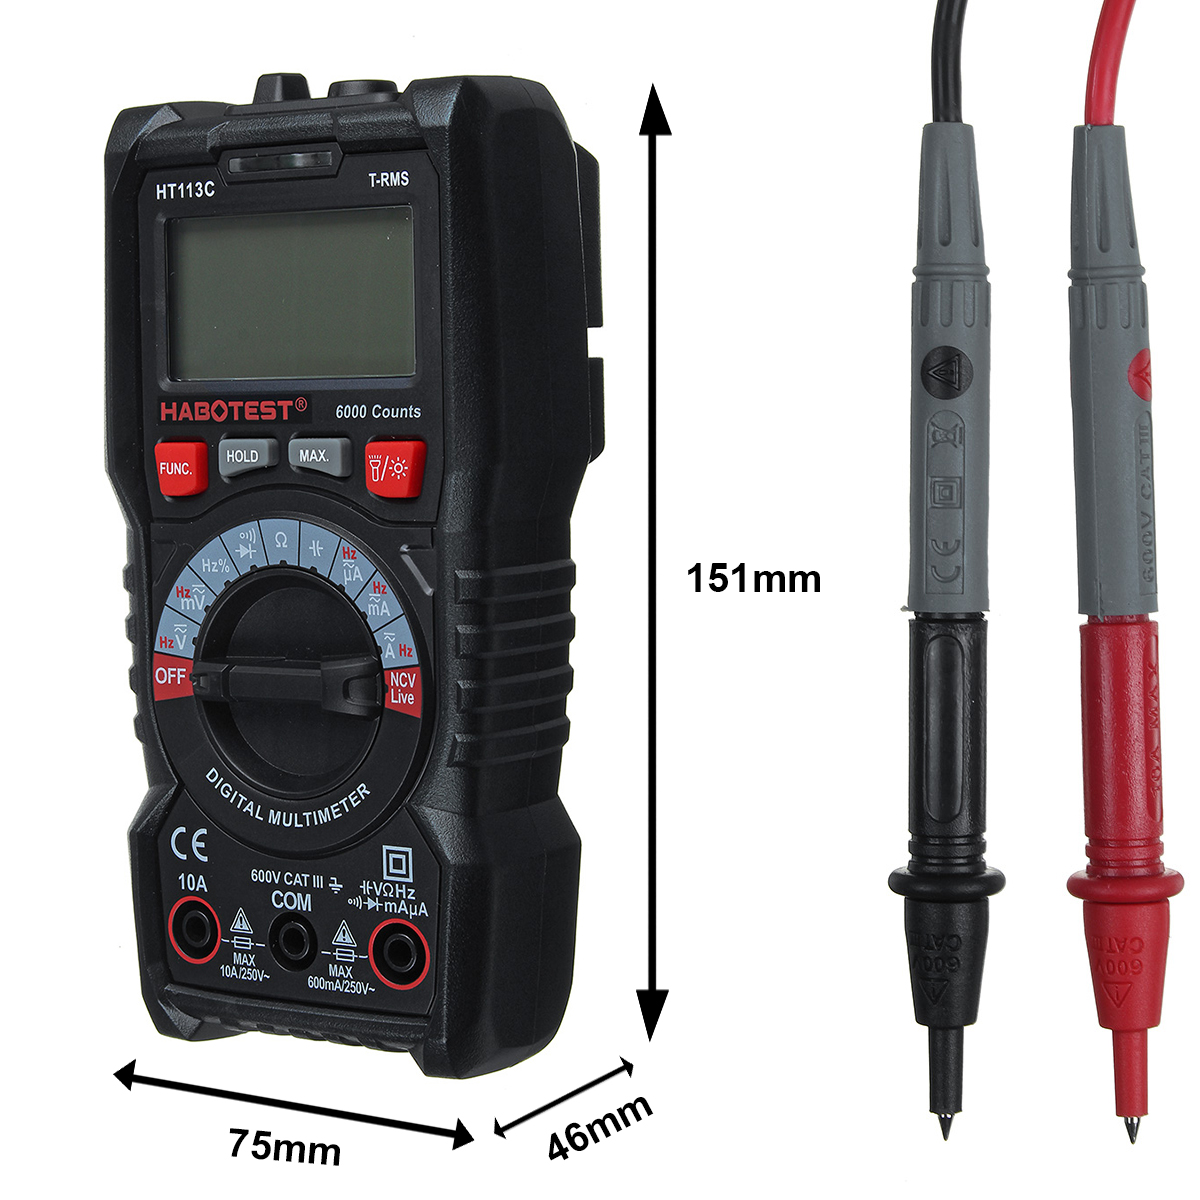 HT113C-Professional-Handheld-LCD-Digital-Multimeter-with-Flashlight-ACDC-Voltage-Meter-Amperemeter-O-1816345-6